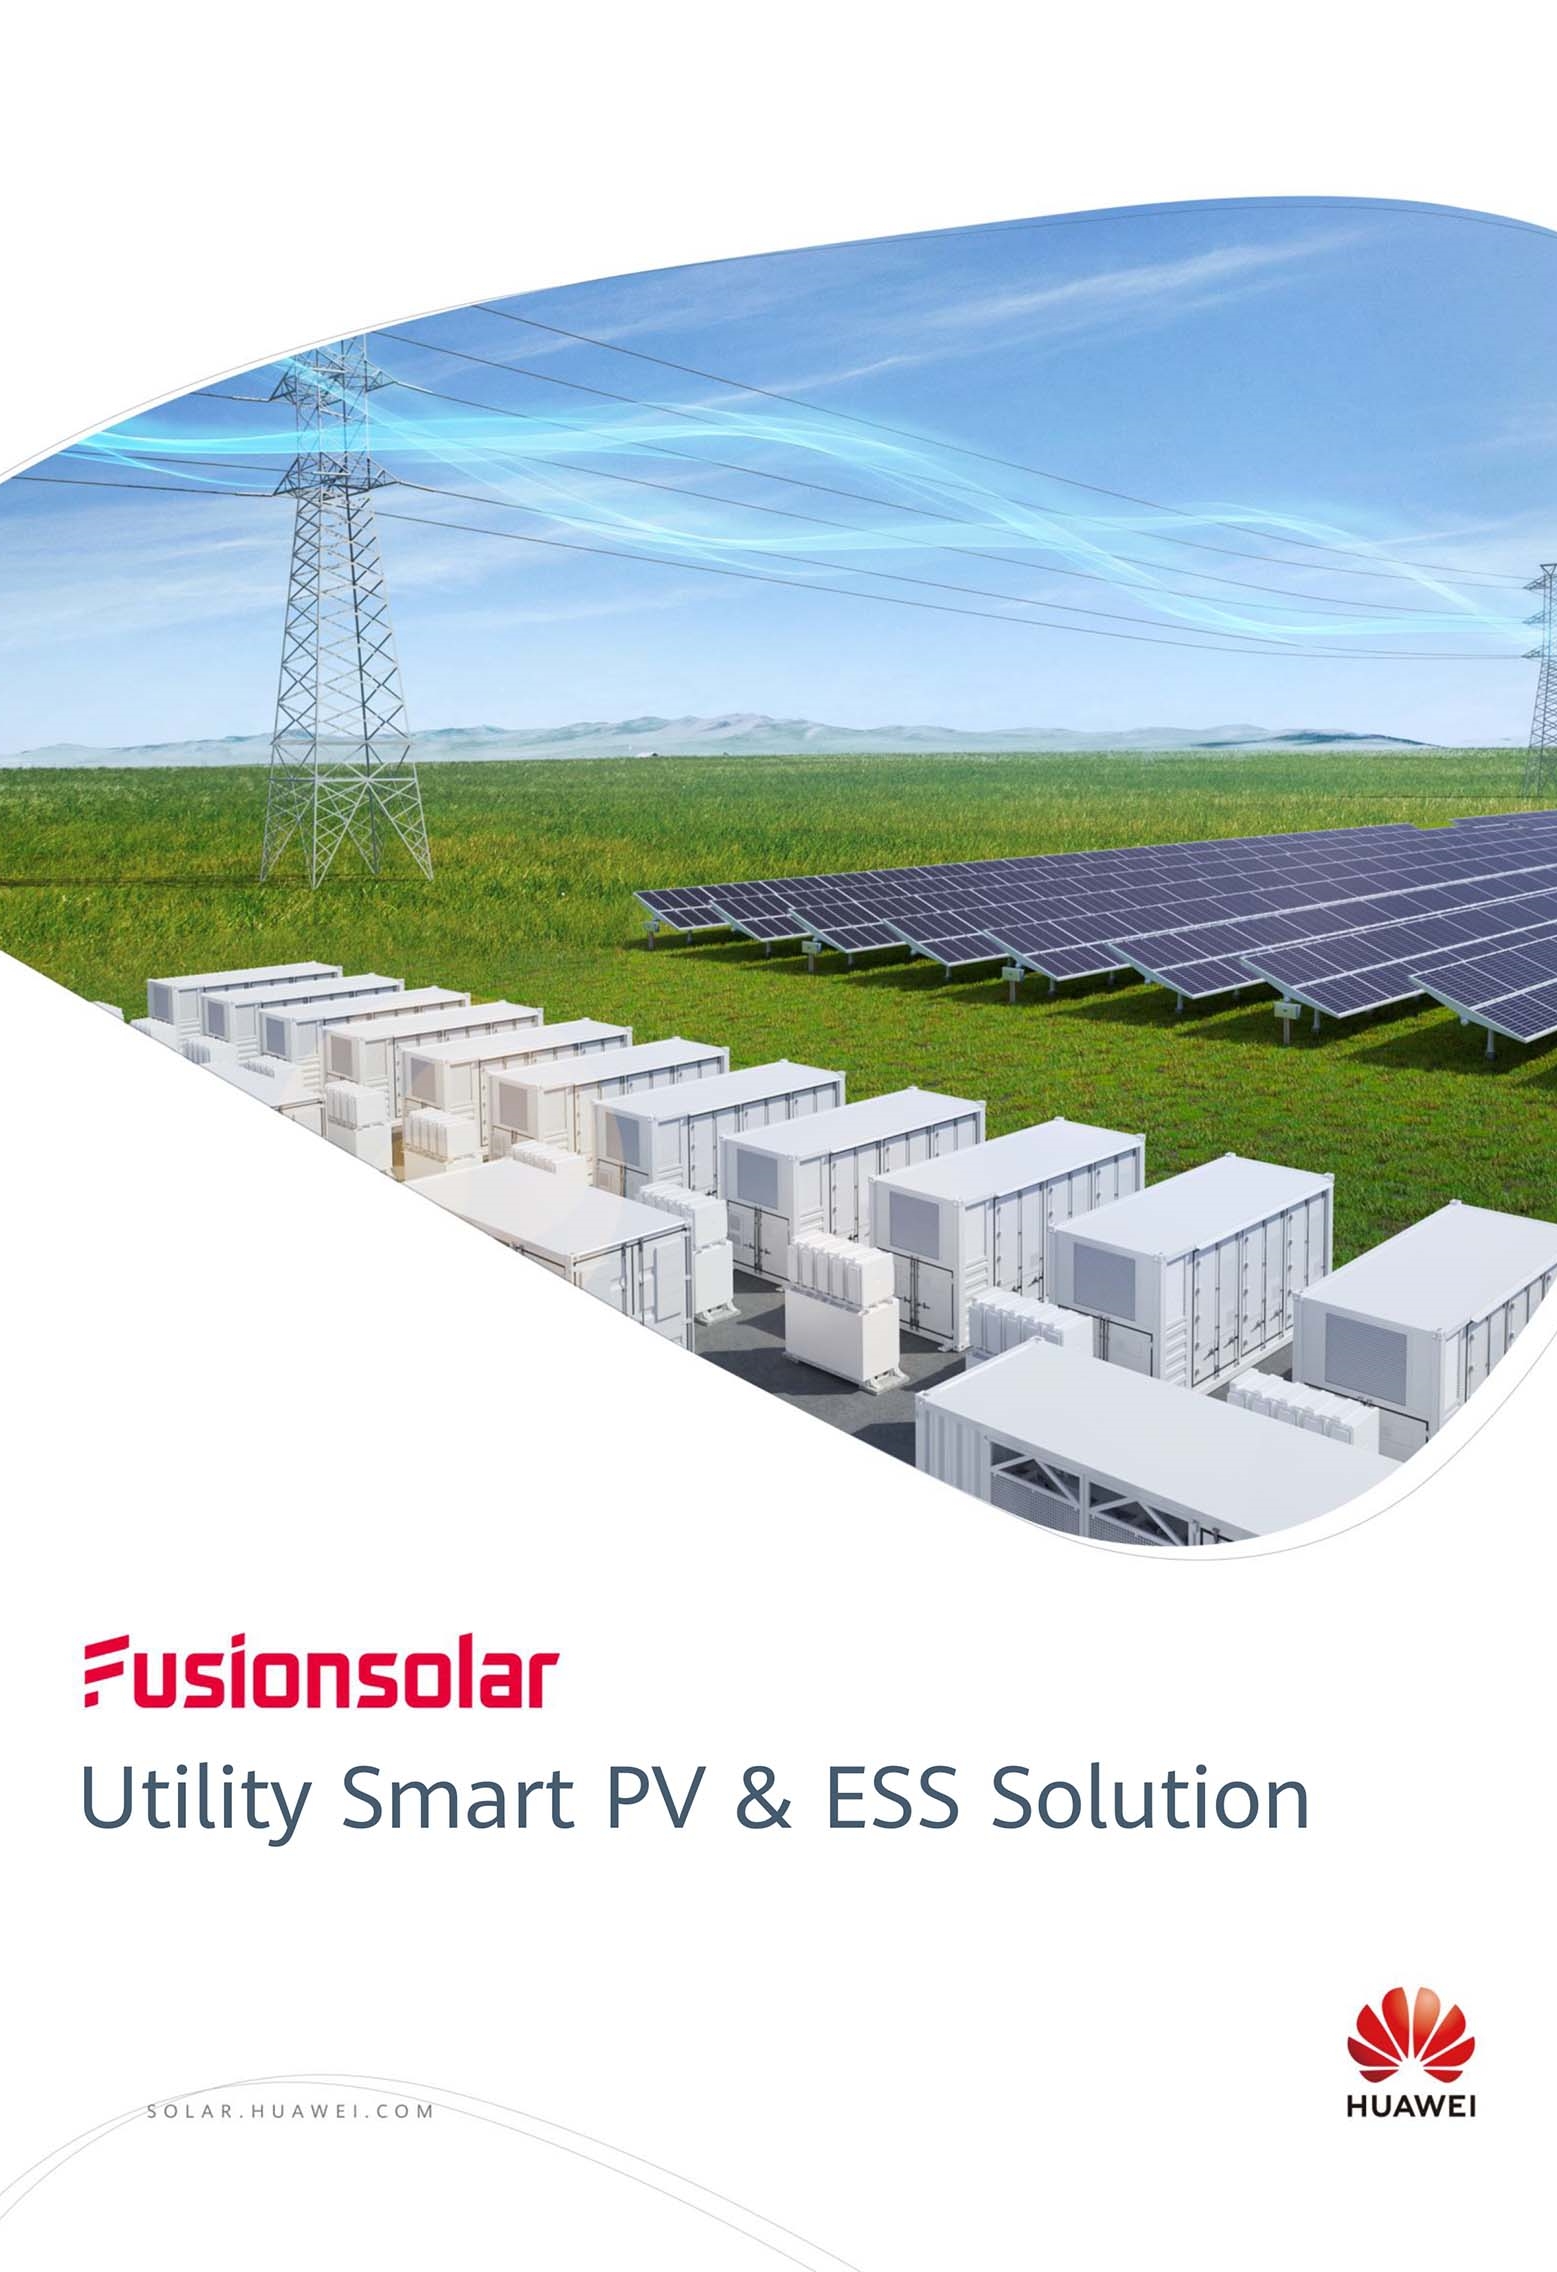 FusionSolar Utility Smart PV & ESS Solution Brochure